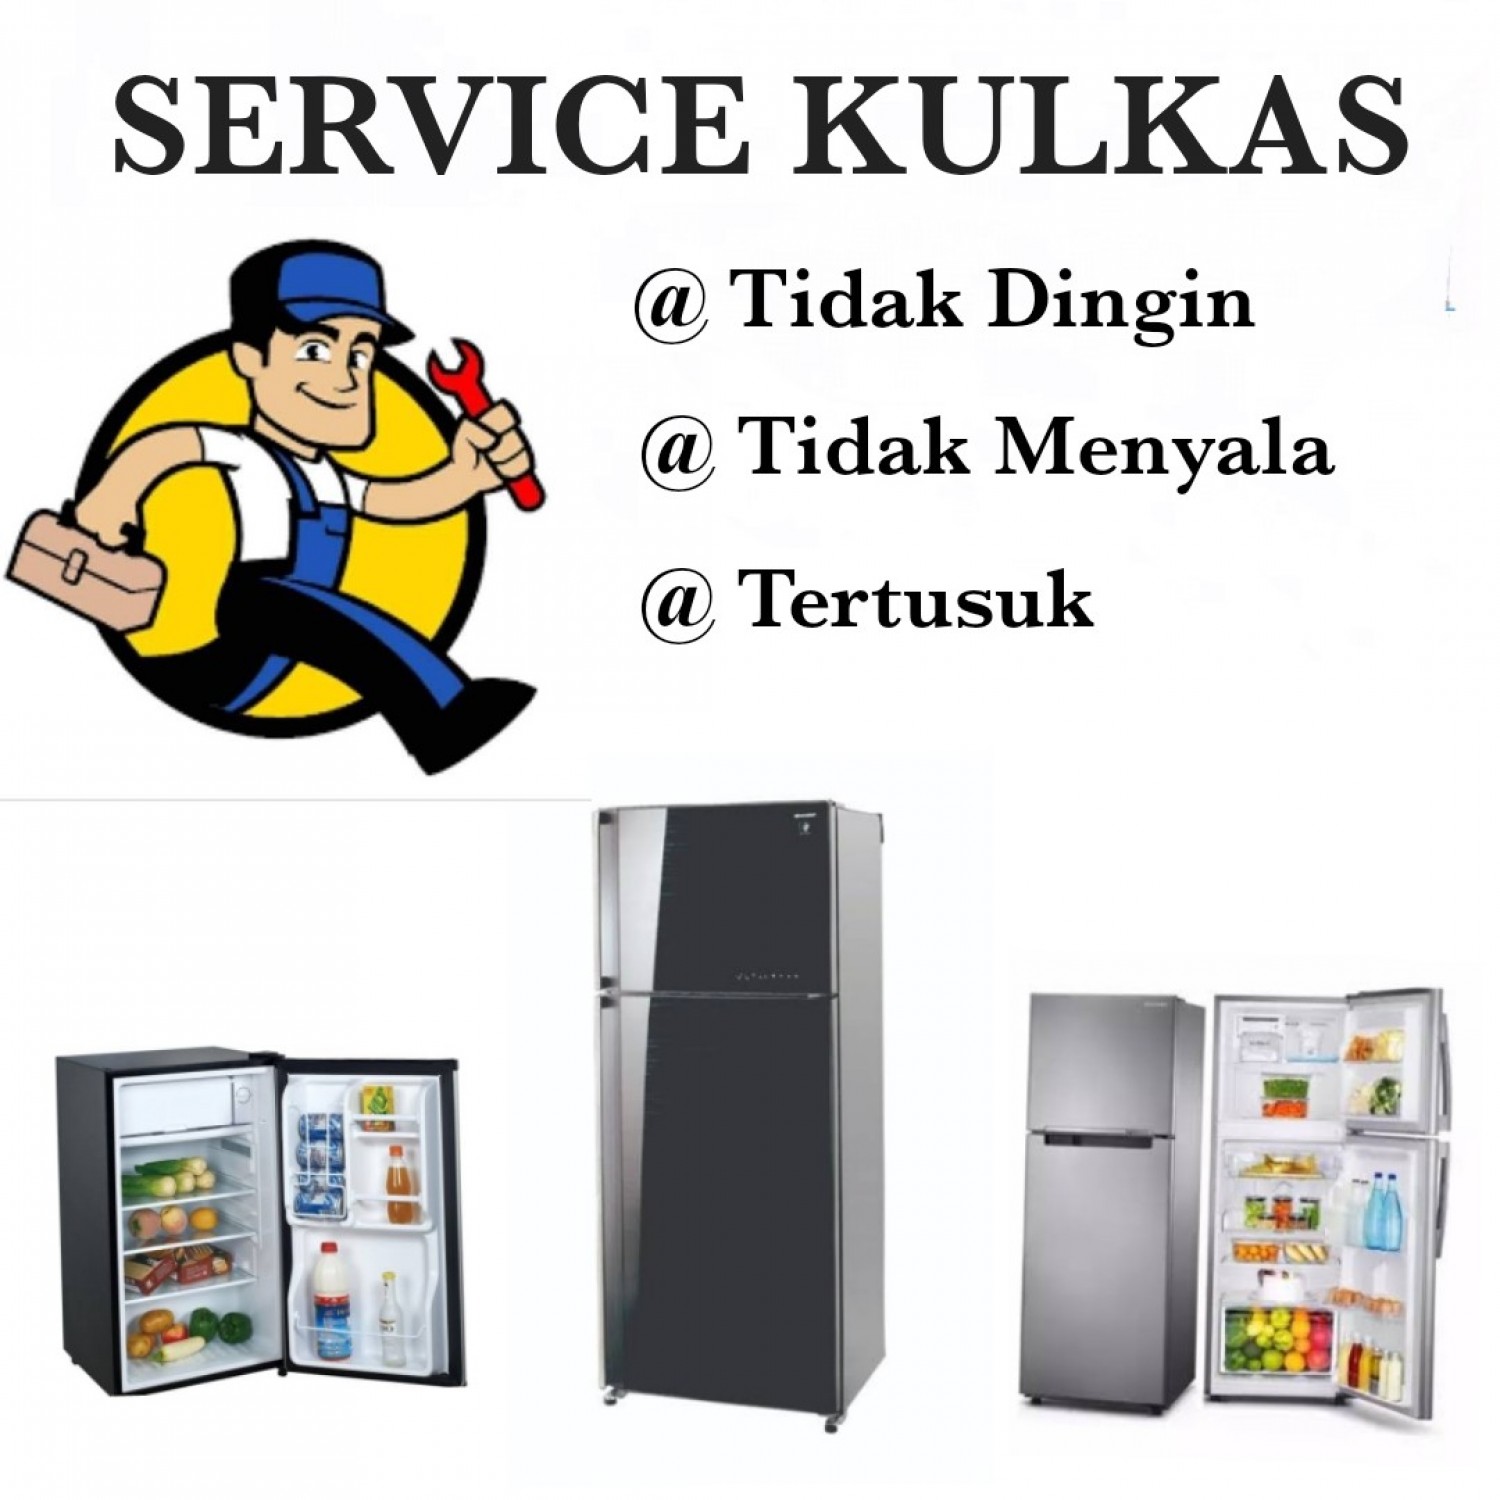 Service Kulkas Ngaglik Sleman